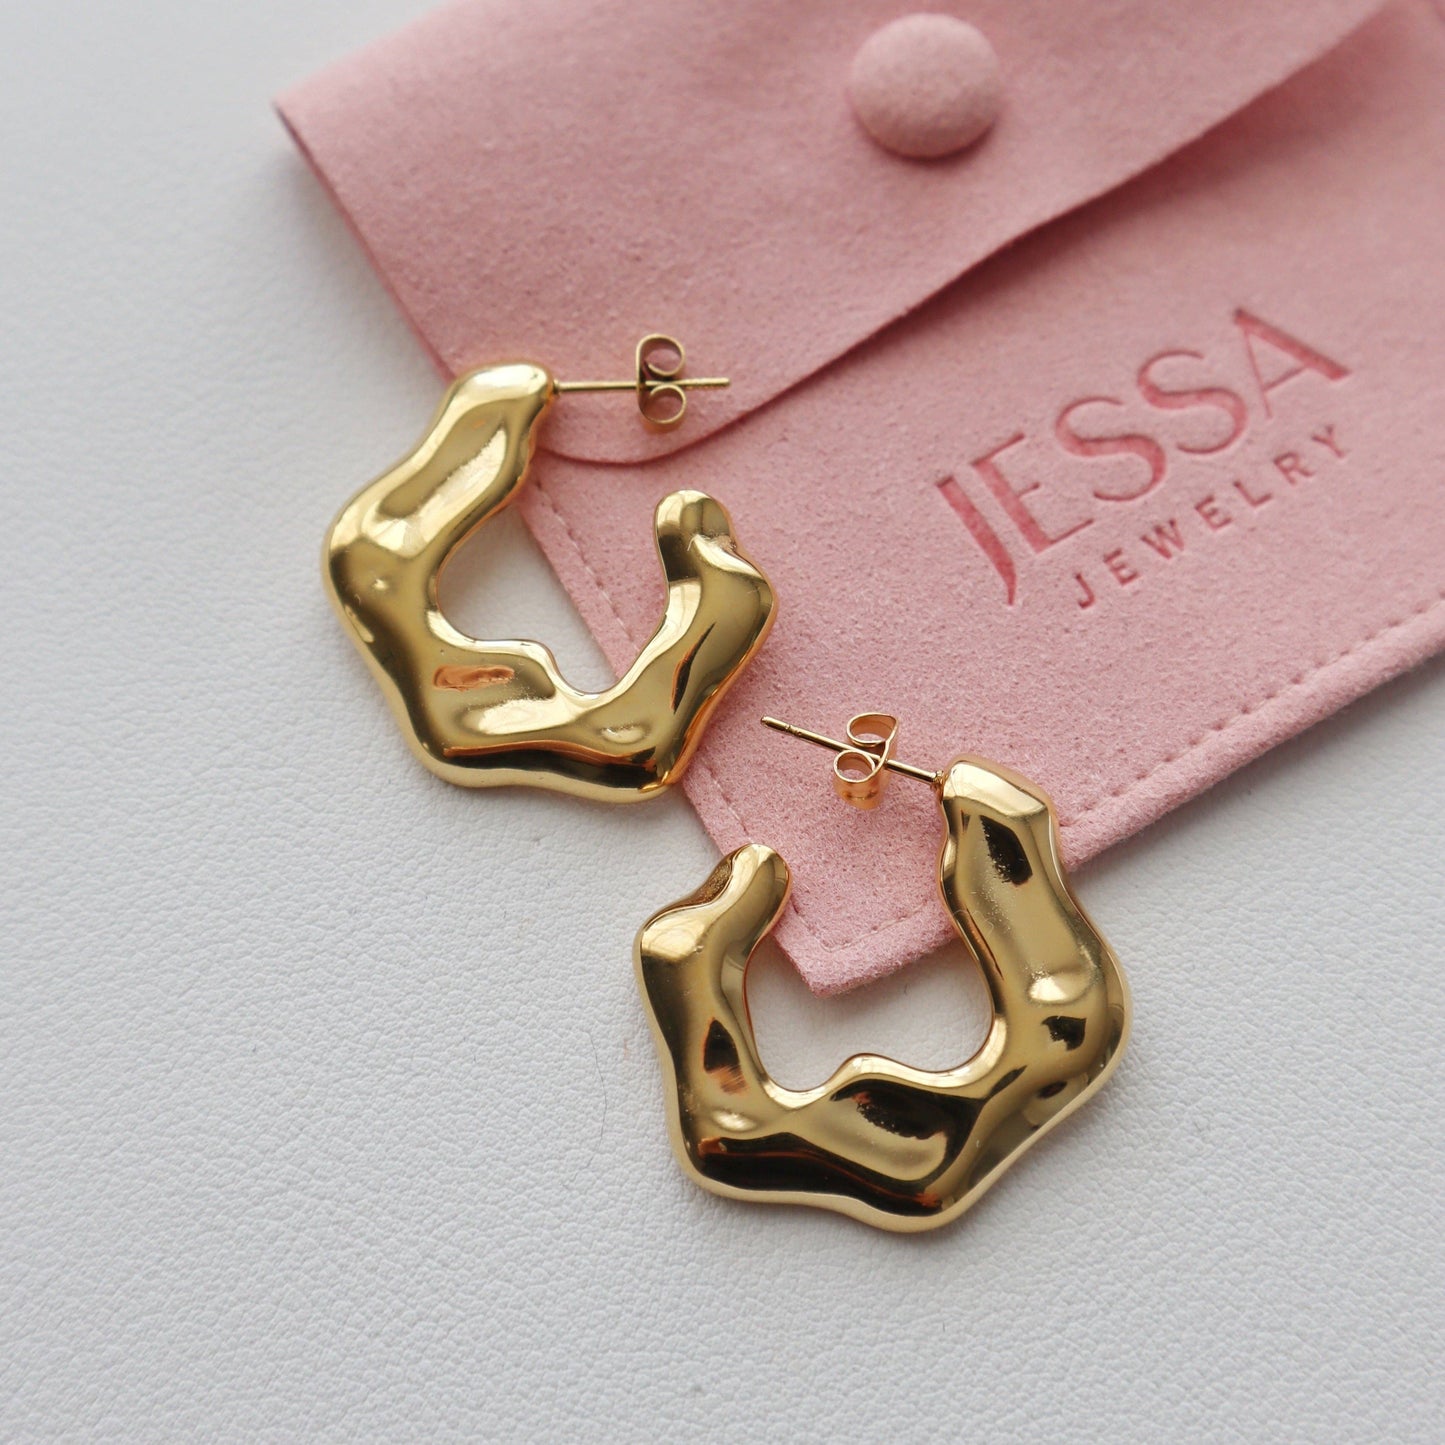 JESSA Jewelry - River Hoops | Statement Gold Hoops